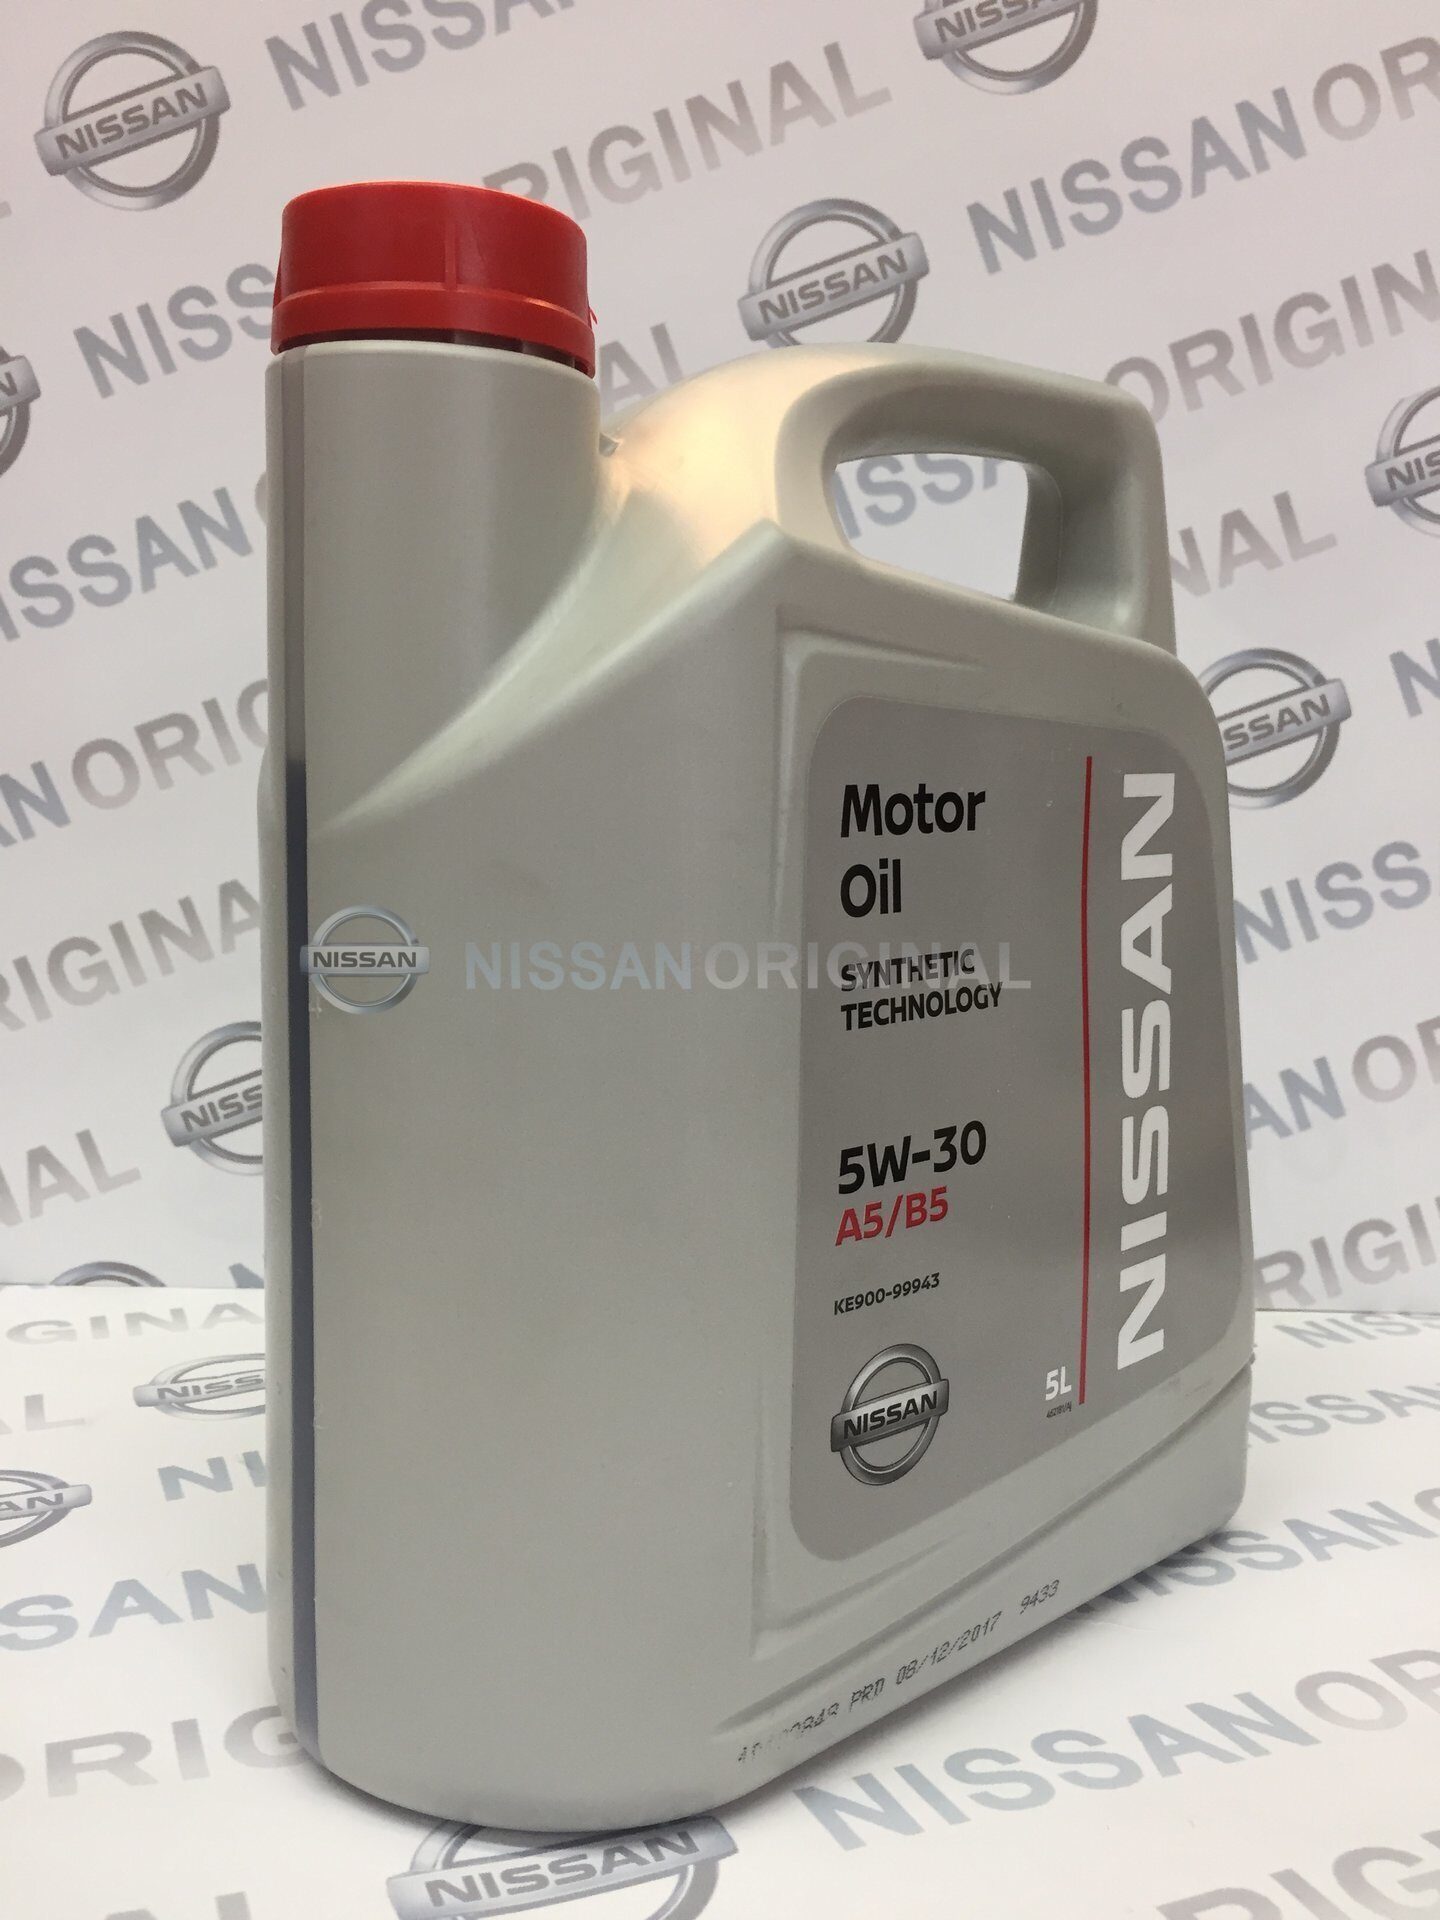 Nissan ke900-99943. Проверочный код масла Ниссан. Моторное масло ниссан ноут